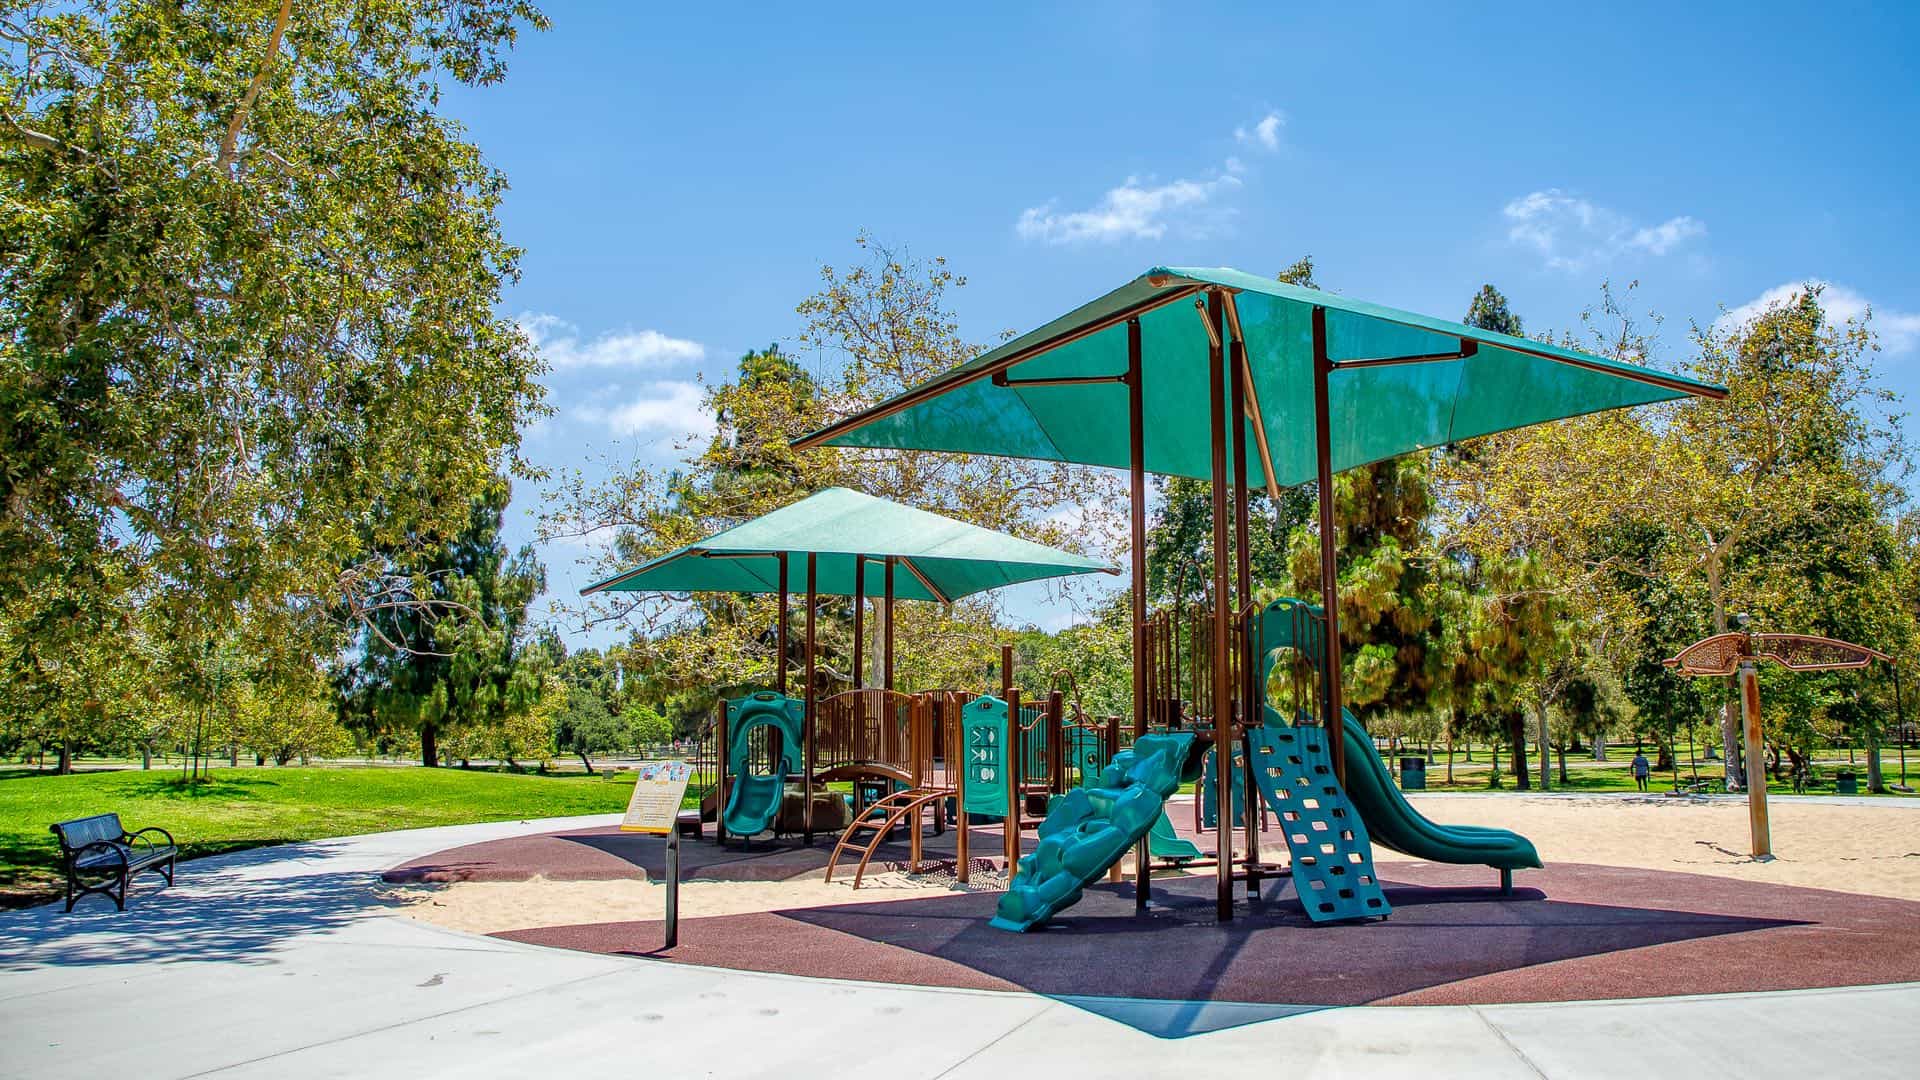 Playground at Eldorado Park, Long Beach, CA